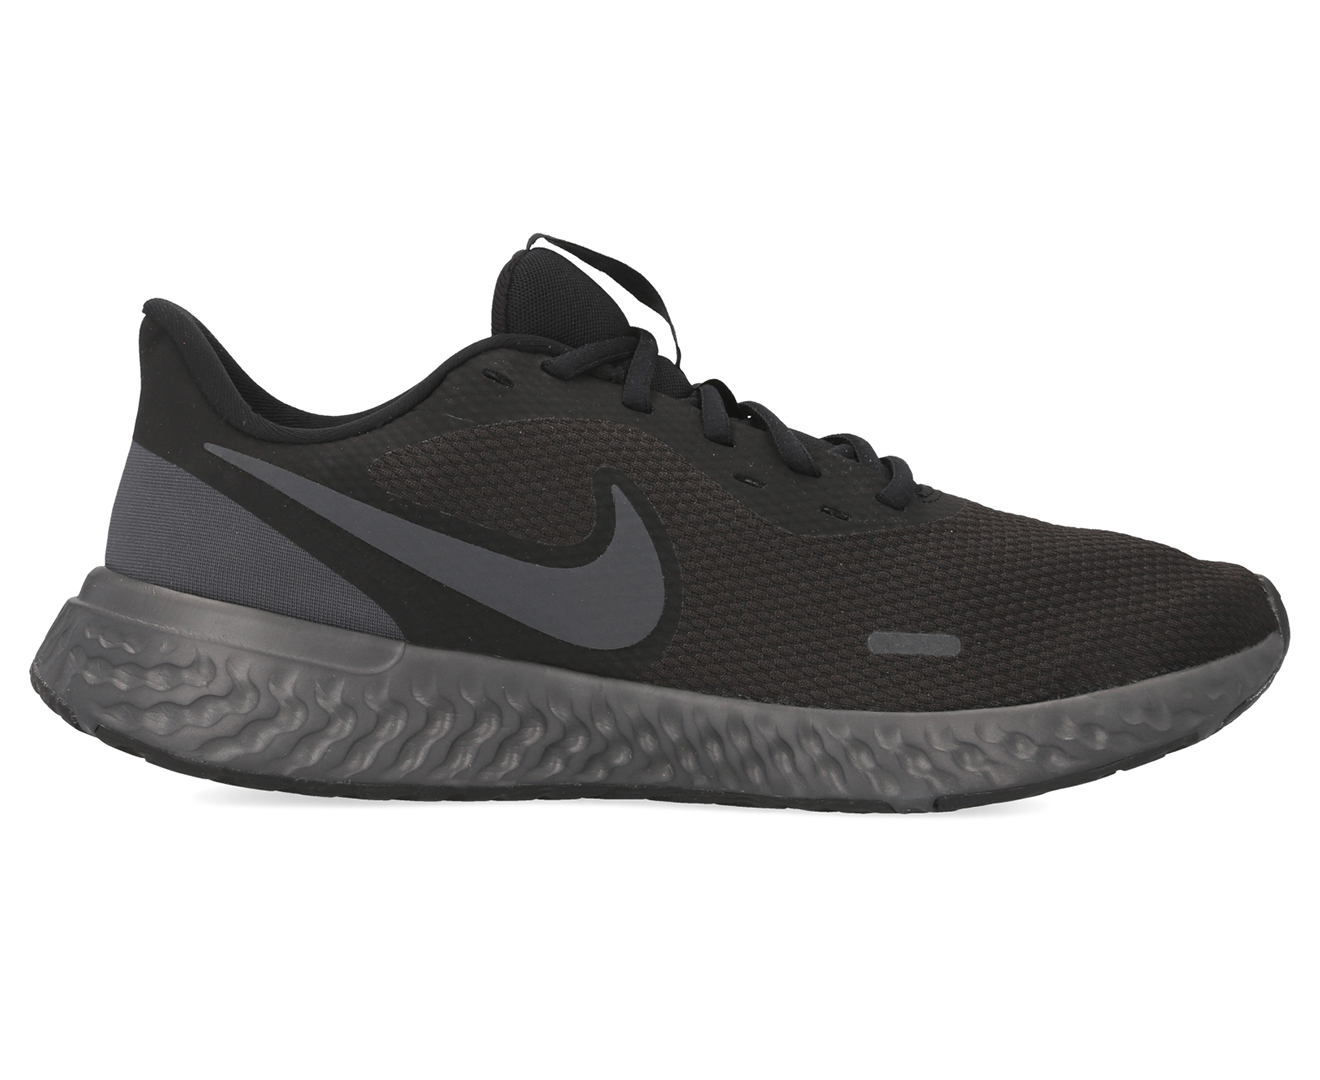 Nike Men's Revolution 5 Running Shoes - Black/Anthracite | Www.catch.co ...